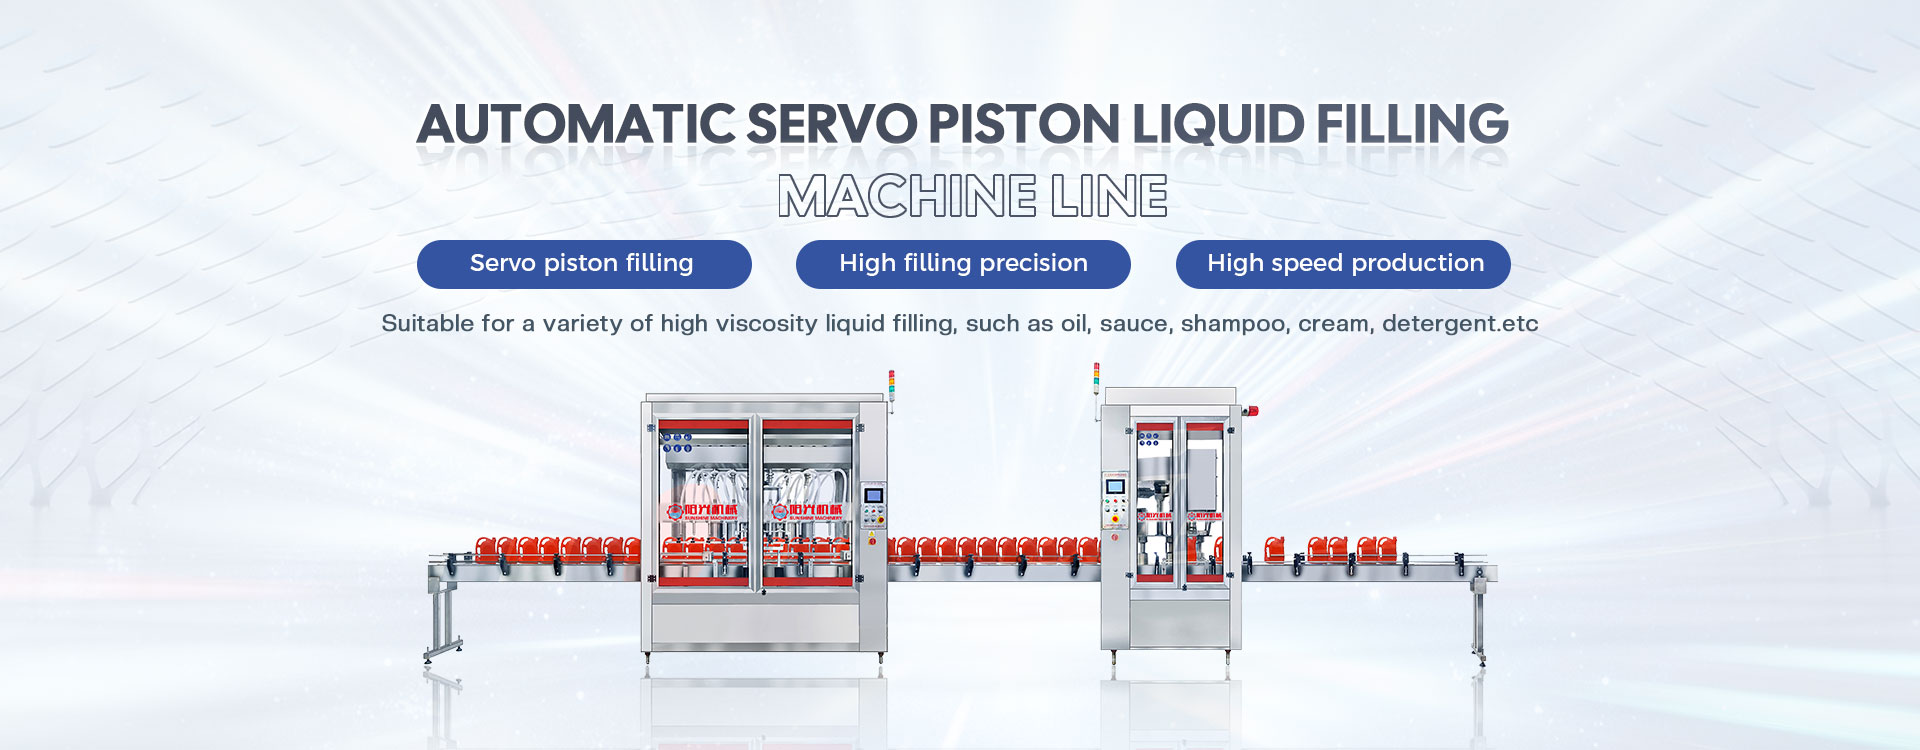 Automatic servo piston liquid filling machine line